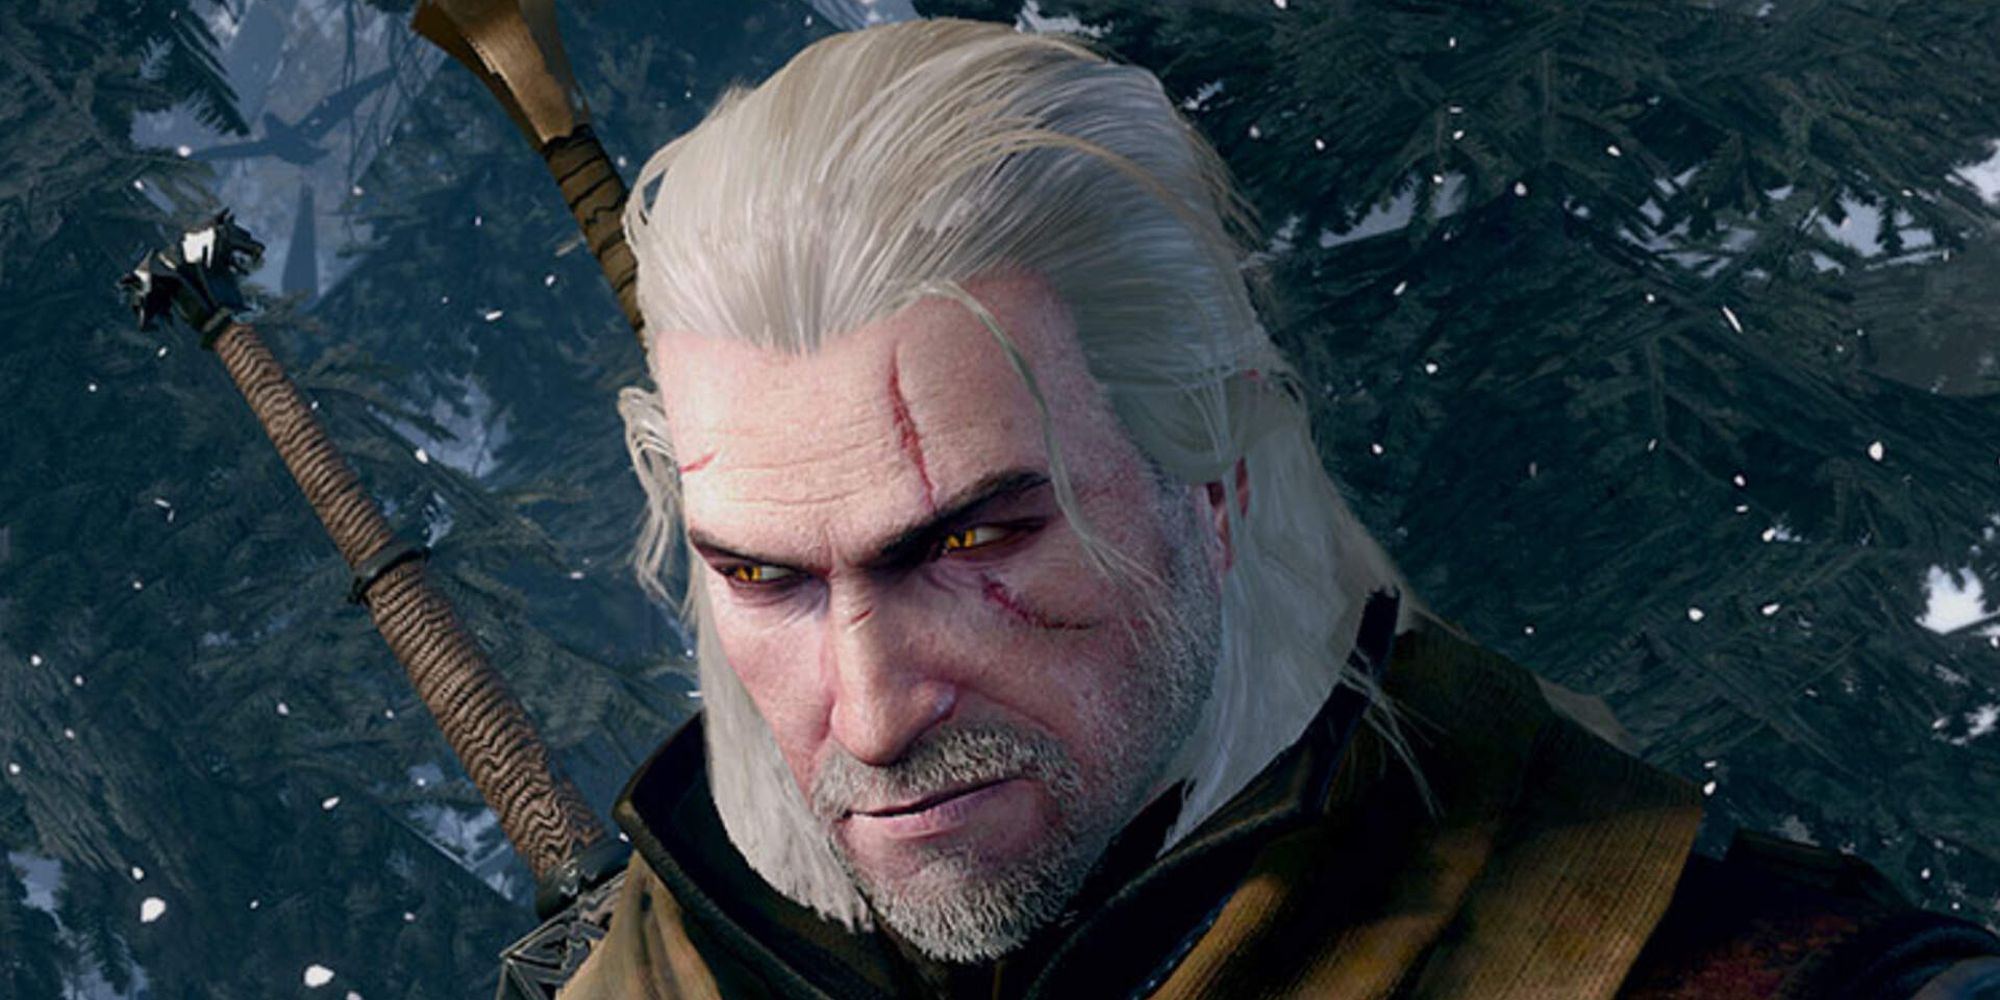 Geralt Of Rivia brilhando na floresta invernal em The Witcher 3 Wild Hunt (2015)